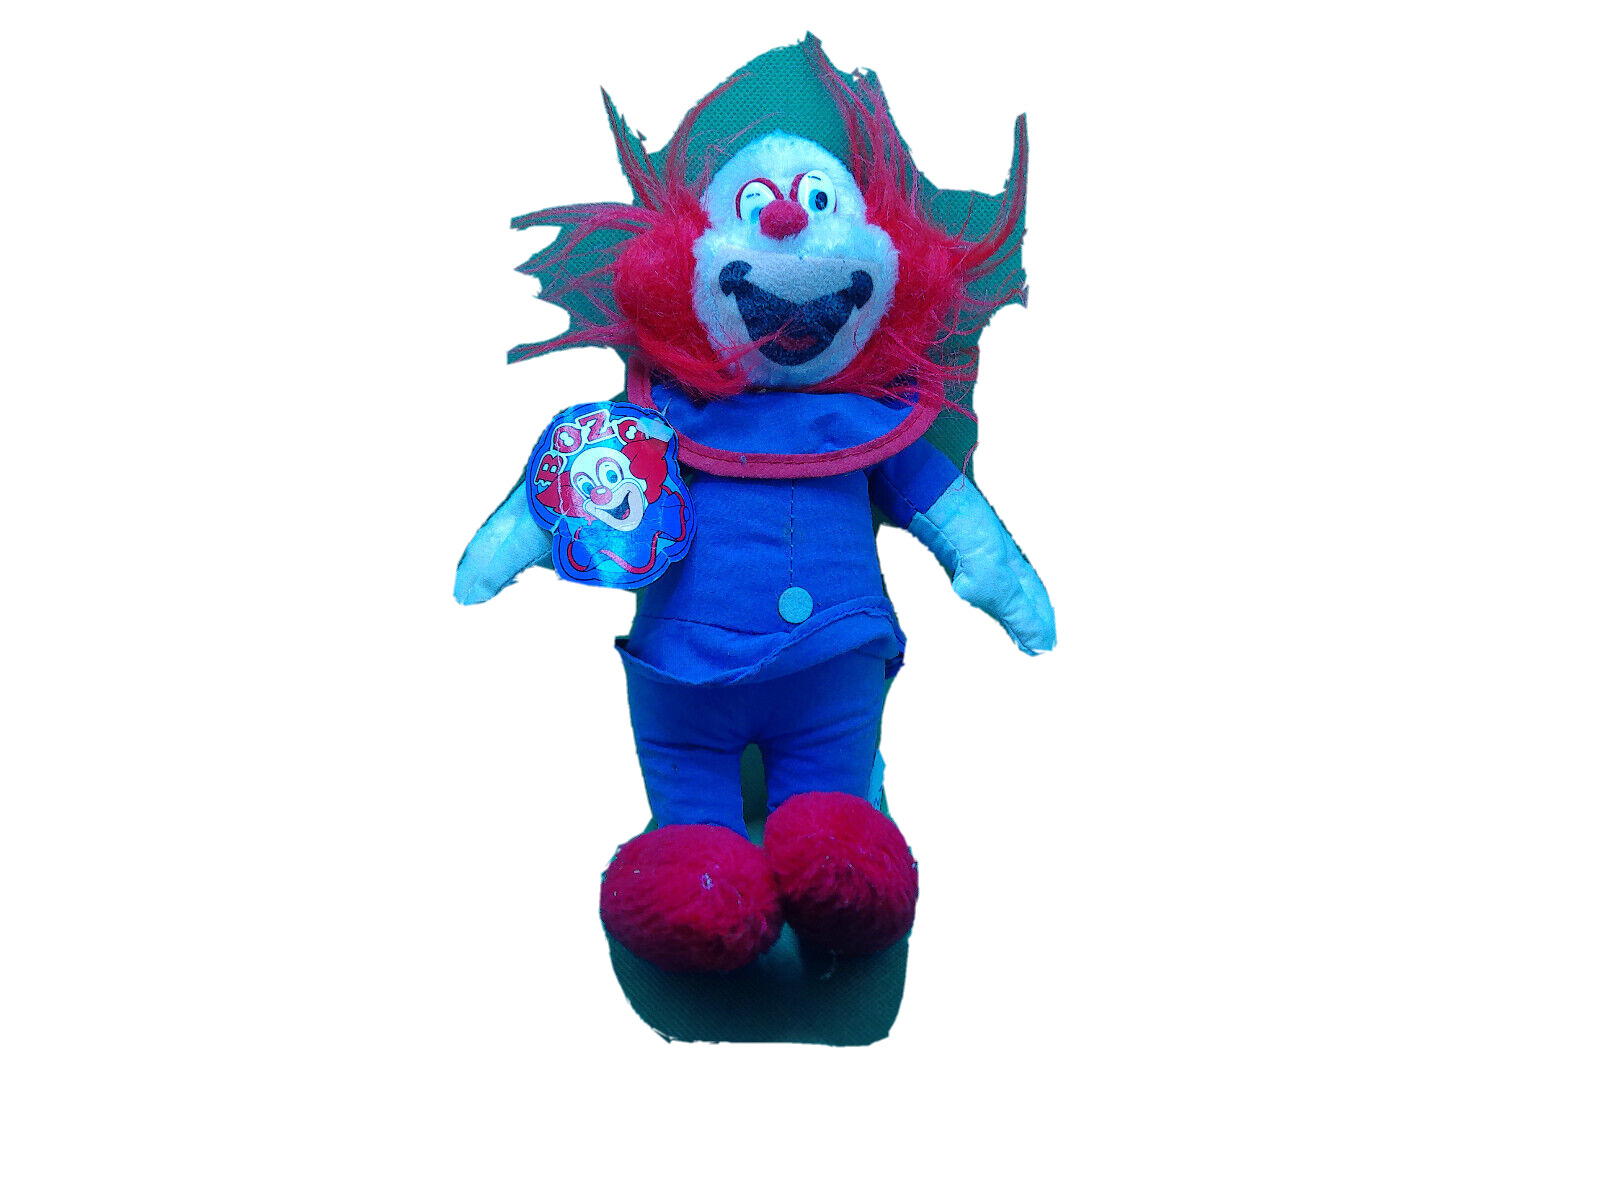 Bozo the Clown Larry Harmon ACE novelty 1989 plush toy